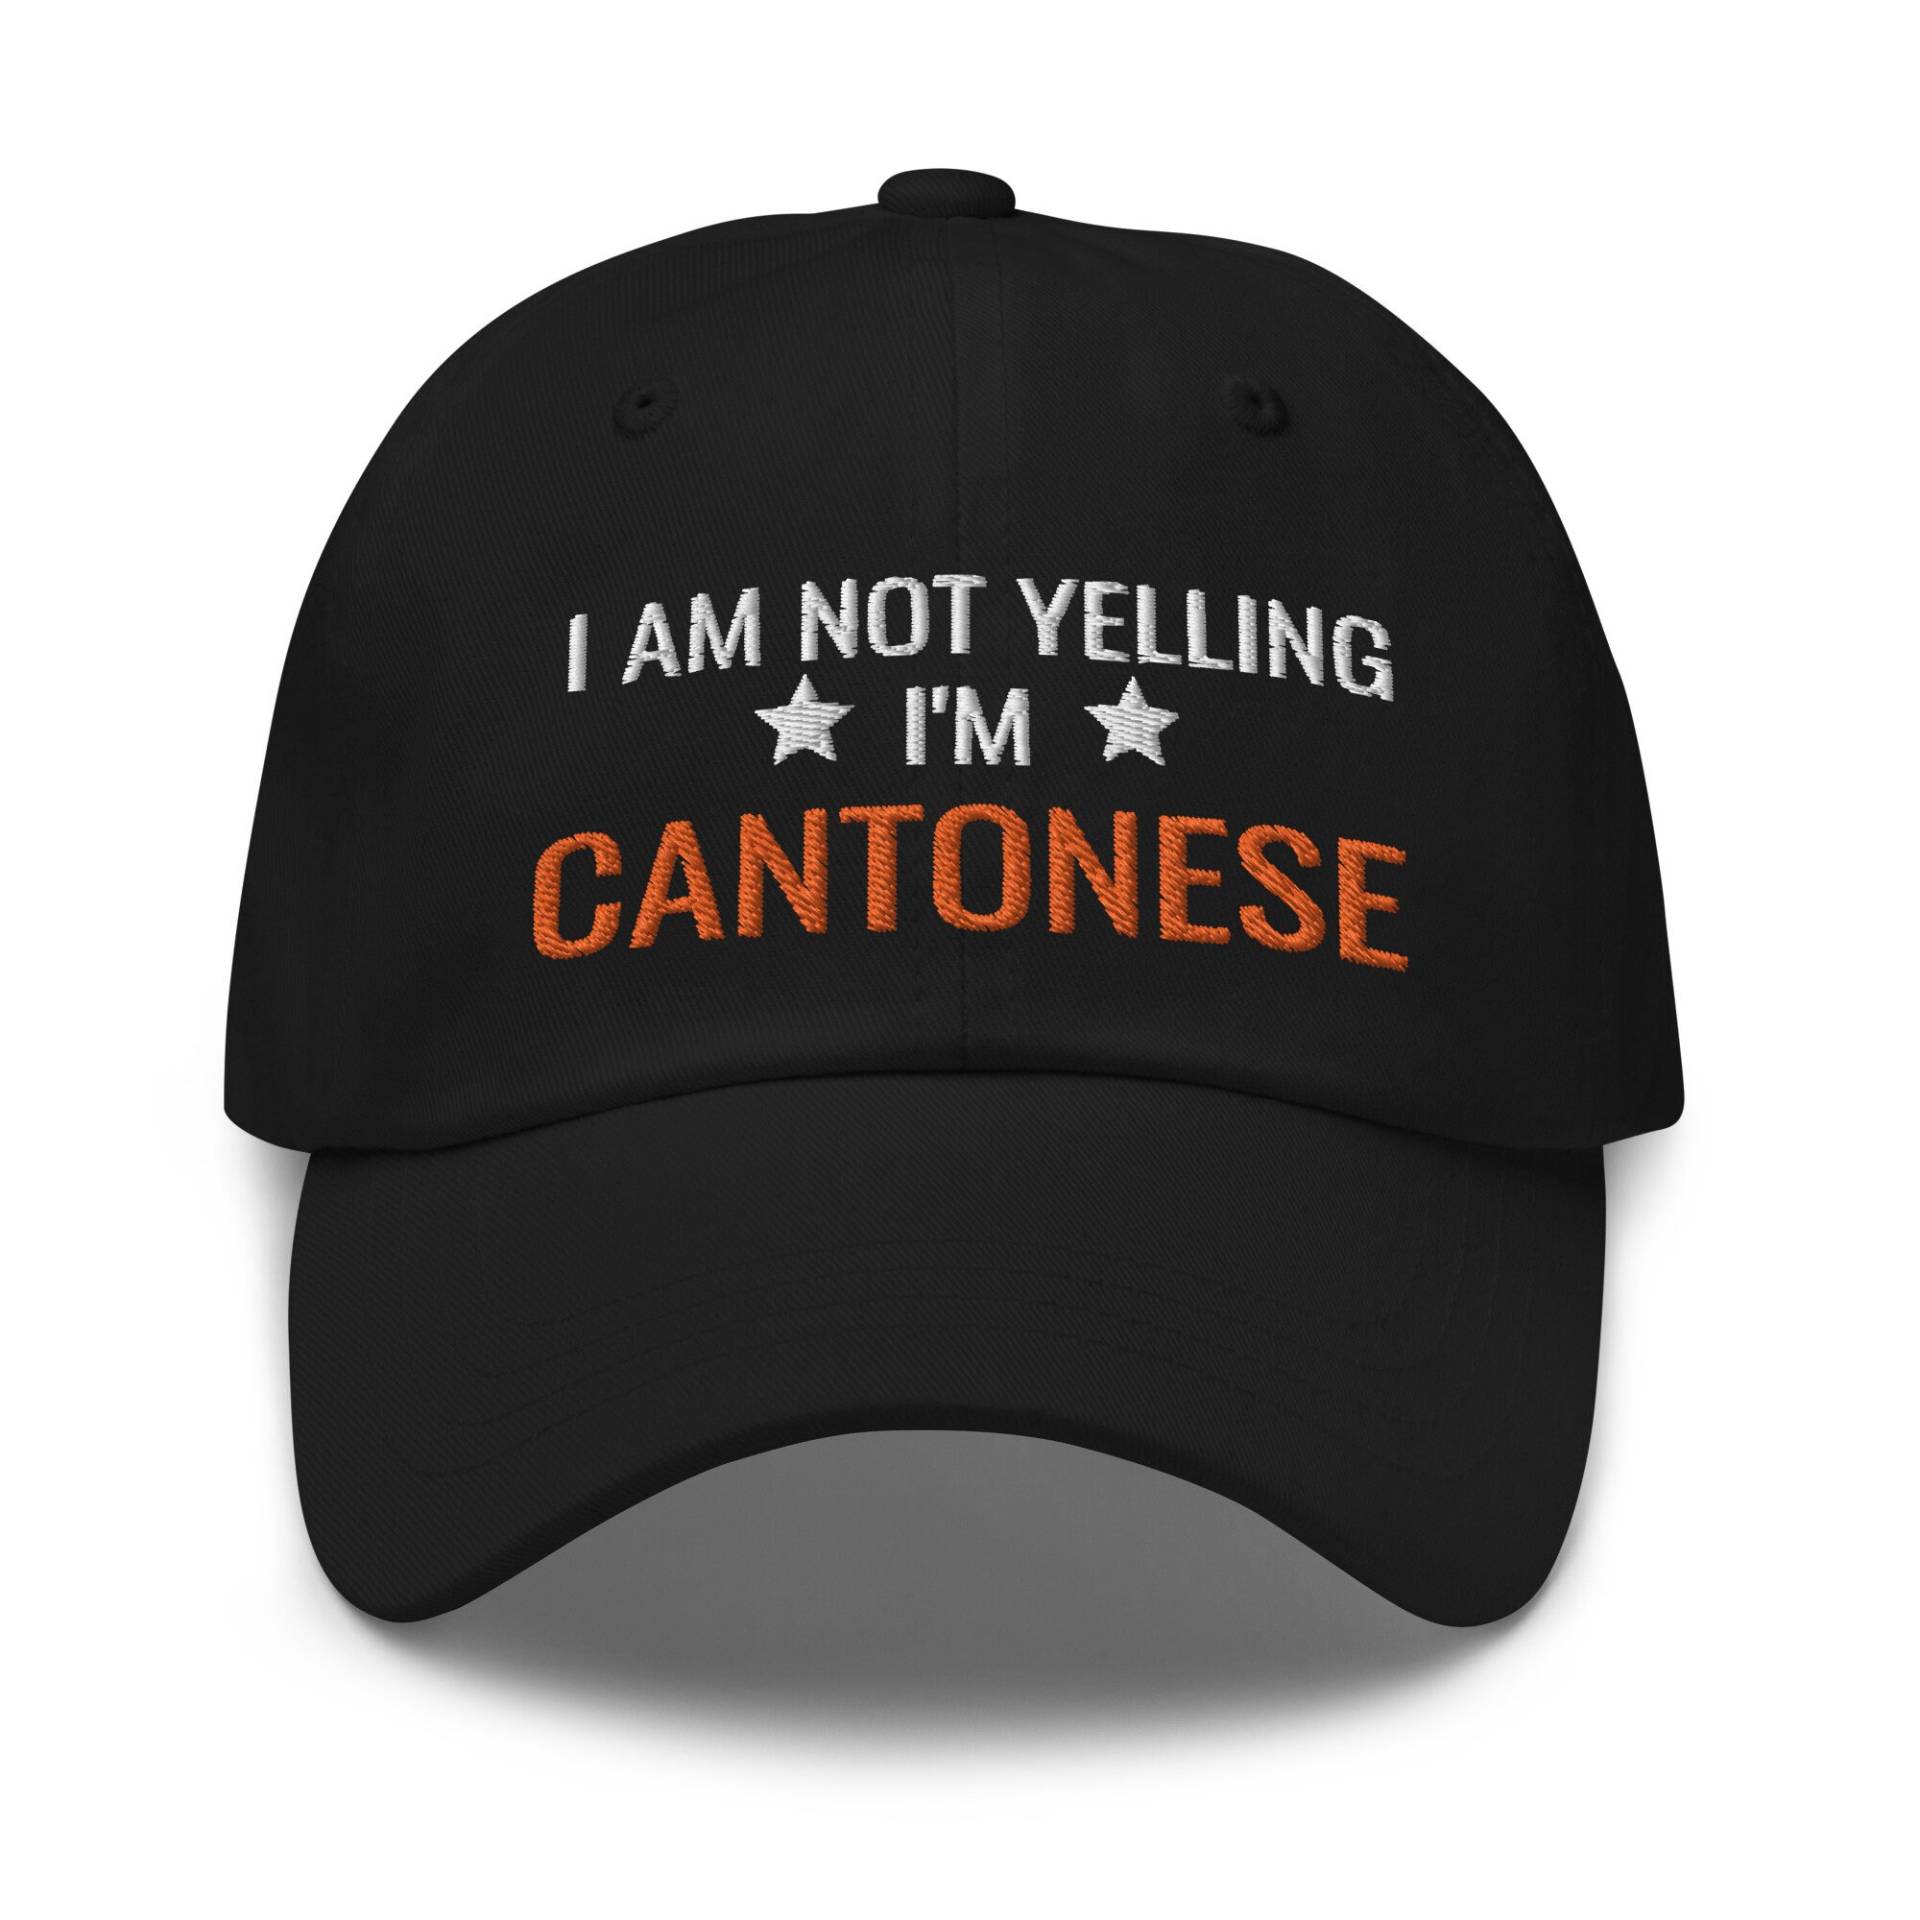 I'm Not Yelling Cantonese Hat, Gift, China Chinese Bestickte Mütze, Baseballmütze von CreativeHats4You